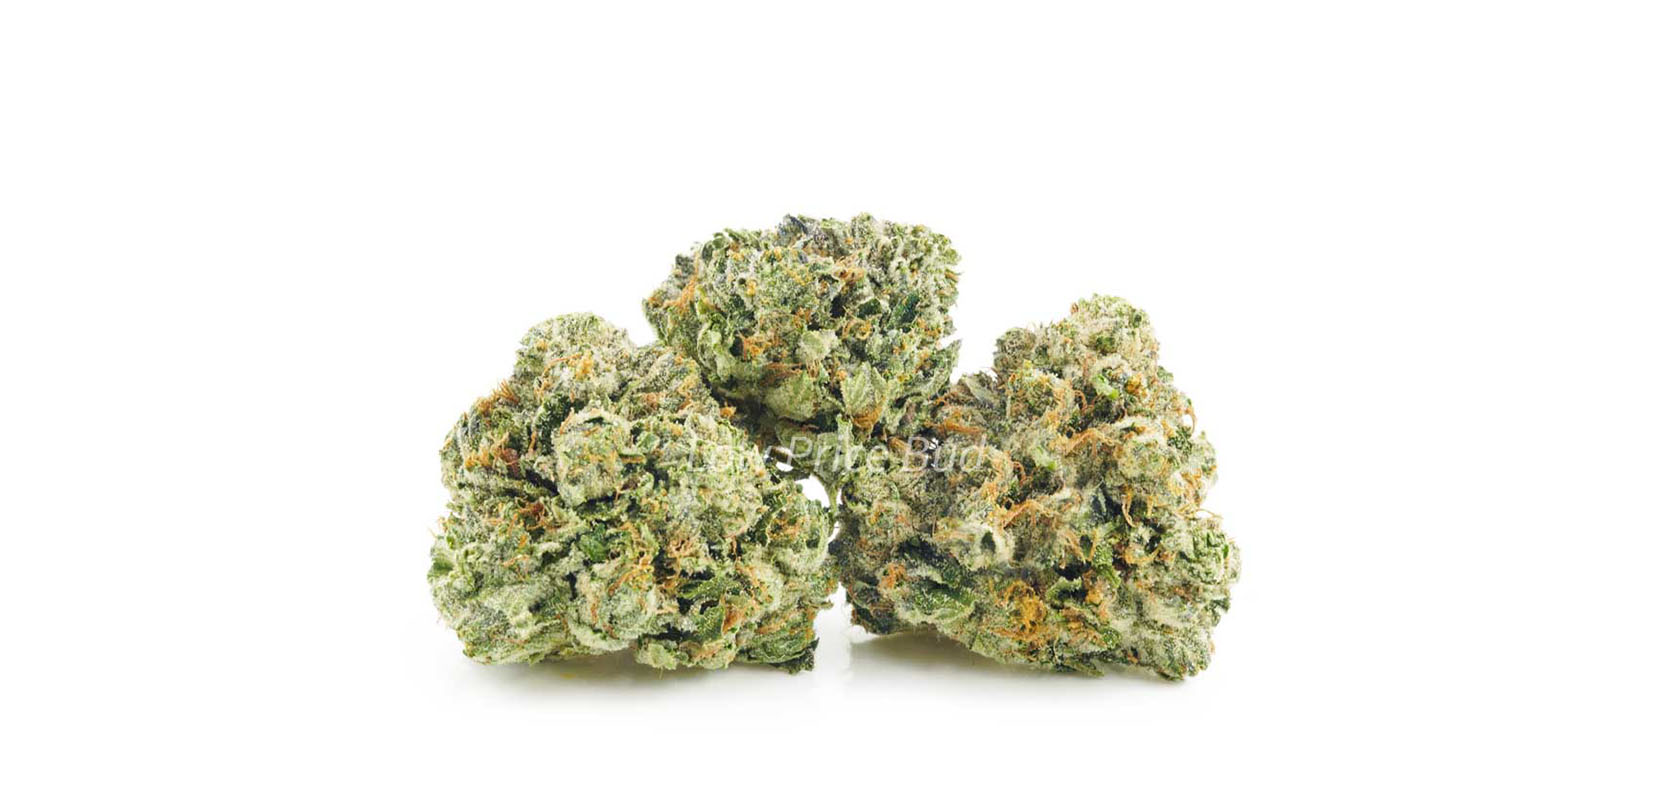 Pink Rockstar weed online BC cannabis. Canadian online dispensary. marijuana dispensary. budgetbuds. weed edibles. canada weed. Dispencary.